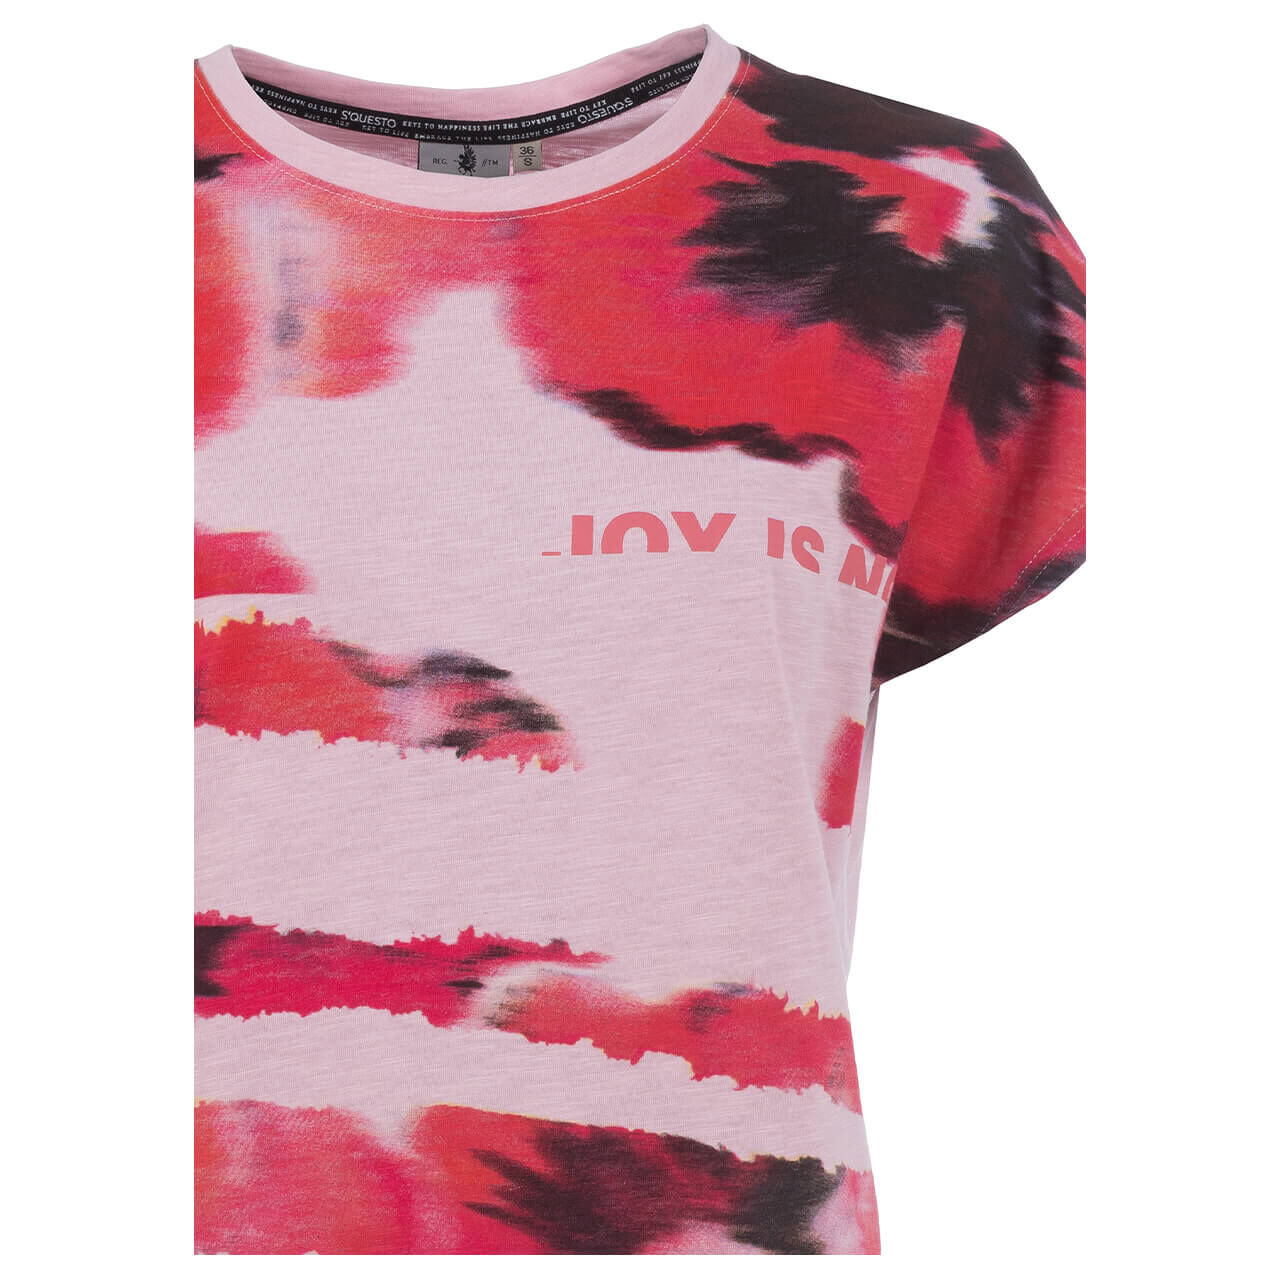 Soquesto Damen T-Shirt rose cloud